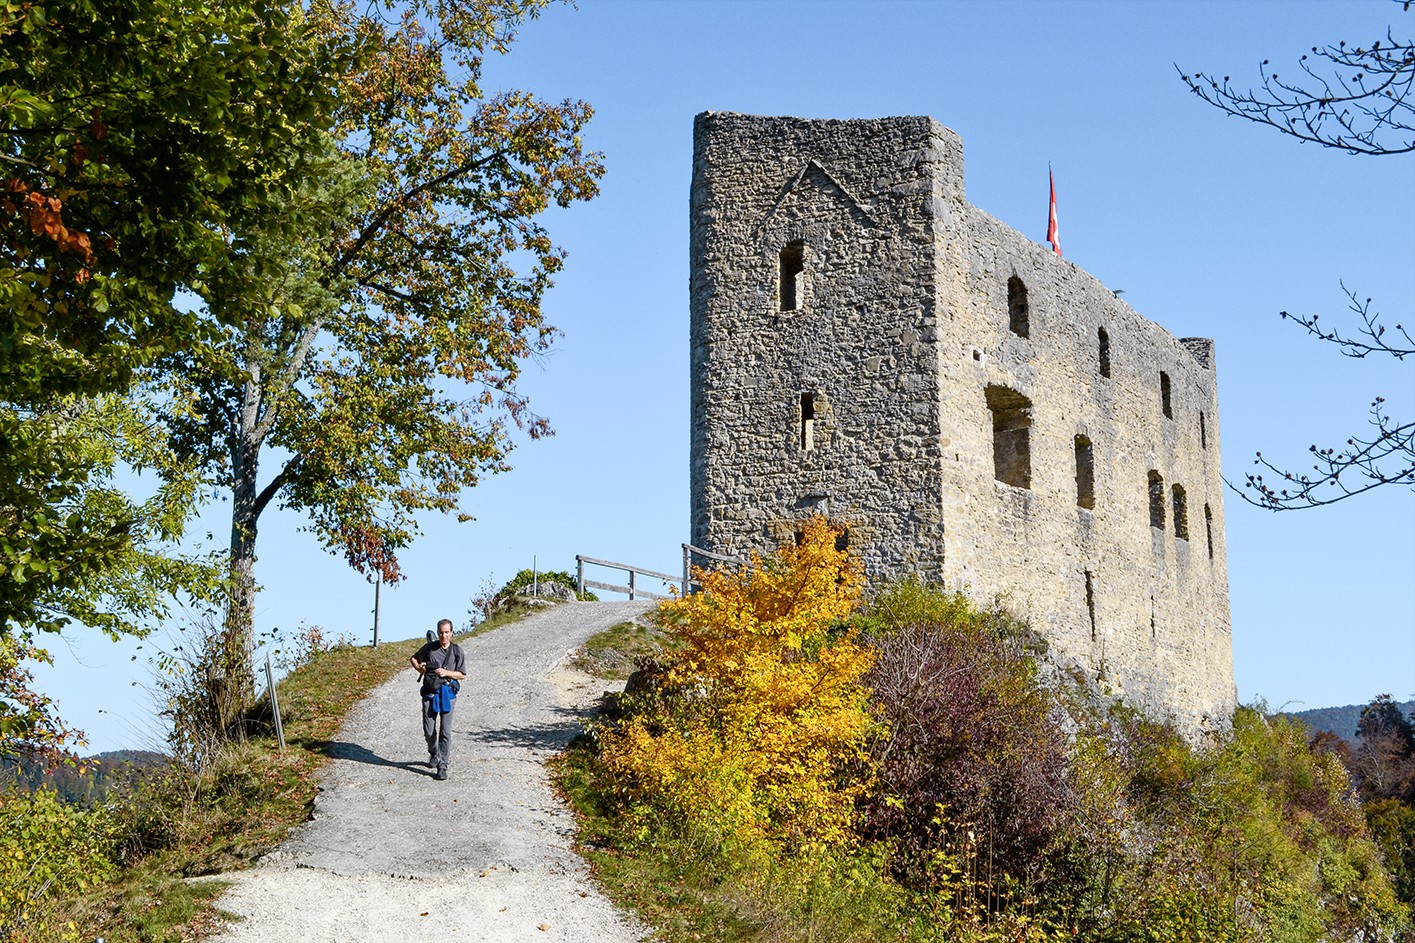 La ruine du château de Gilgenberg surplombe Zullwil.
Photos: Sabine Joss